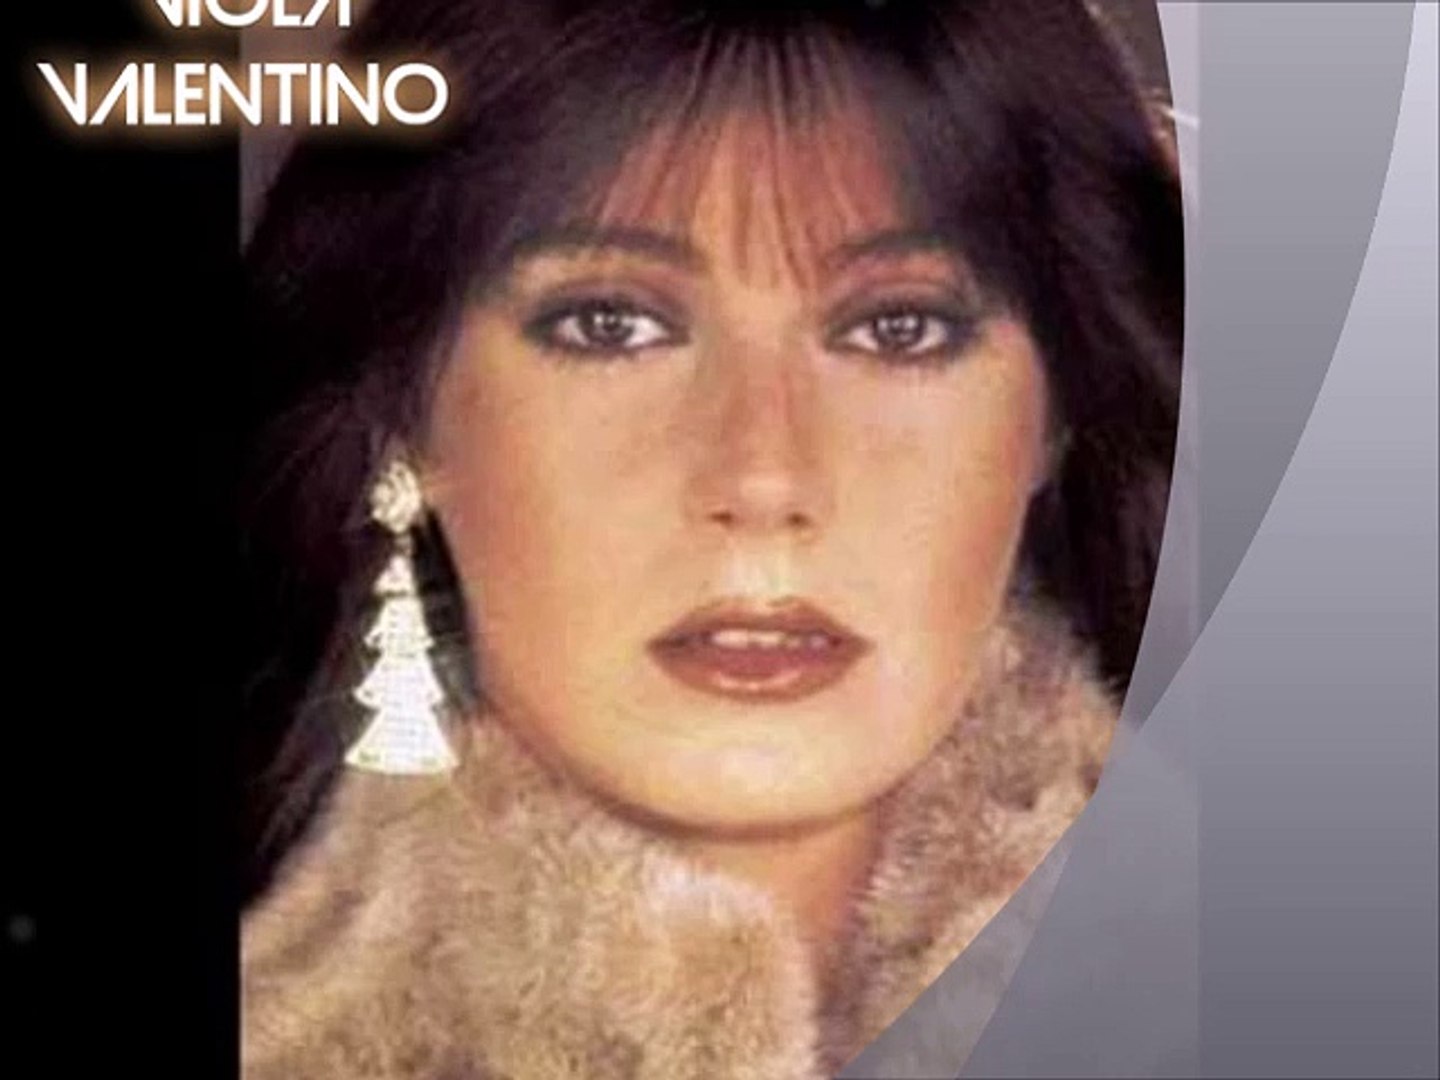 VIOLA VALENTINO - Comprami (1979) - Video Dailymotion